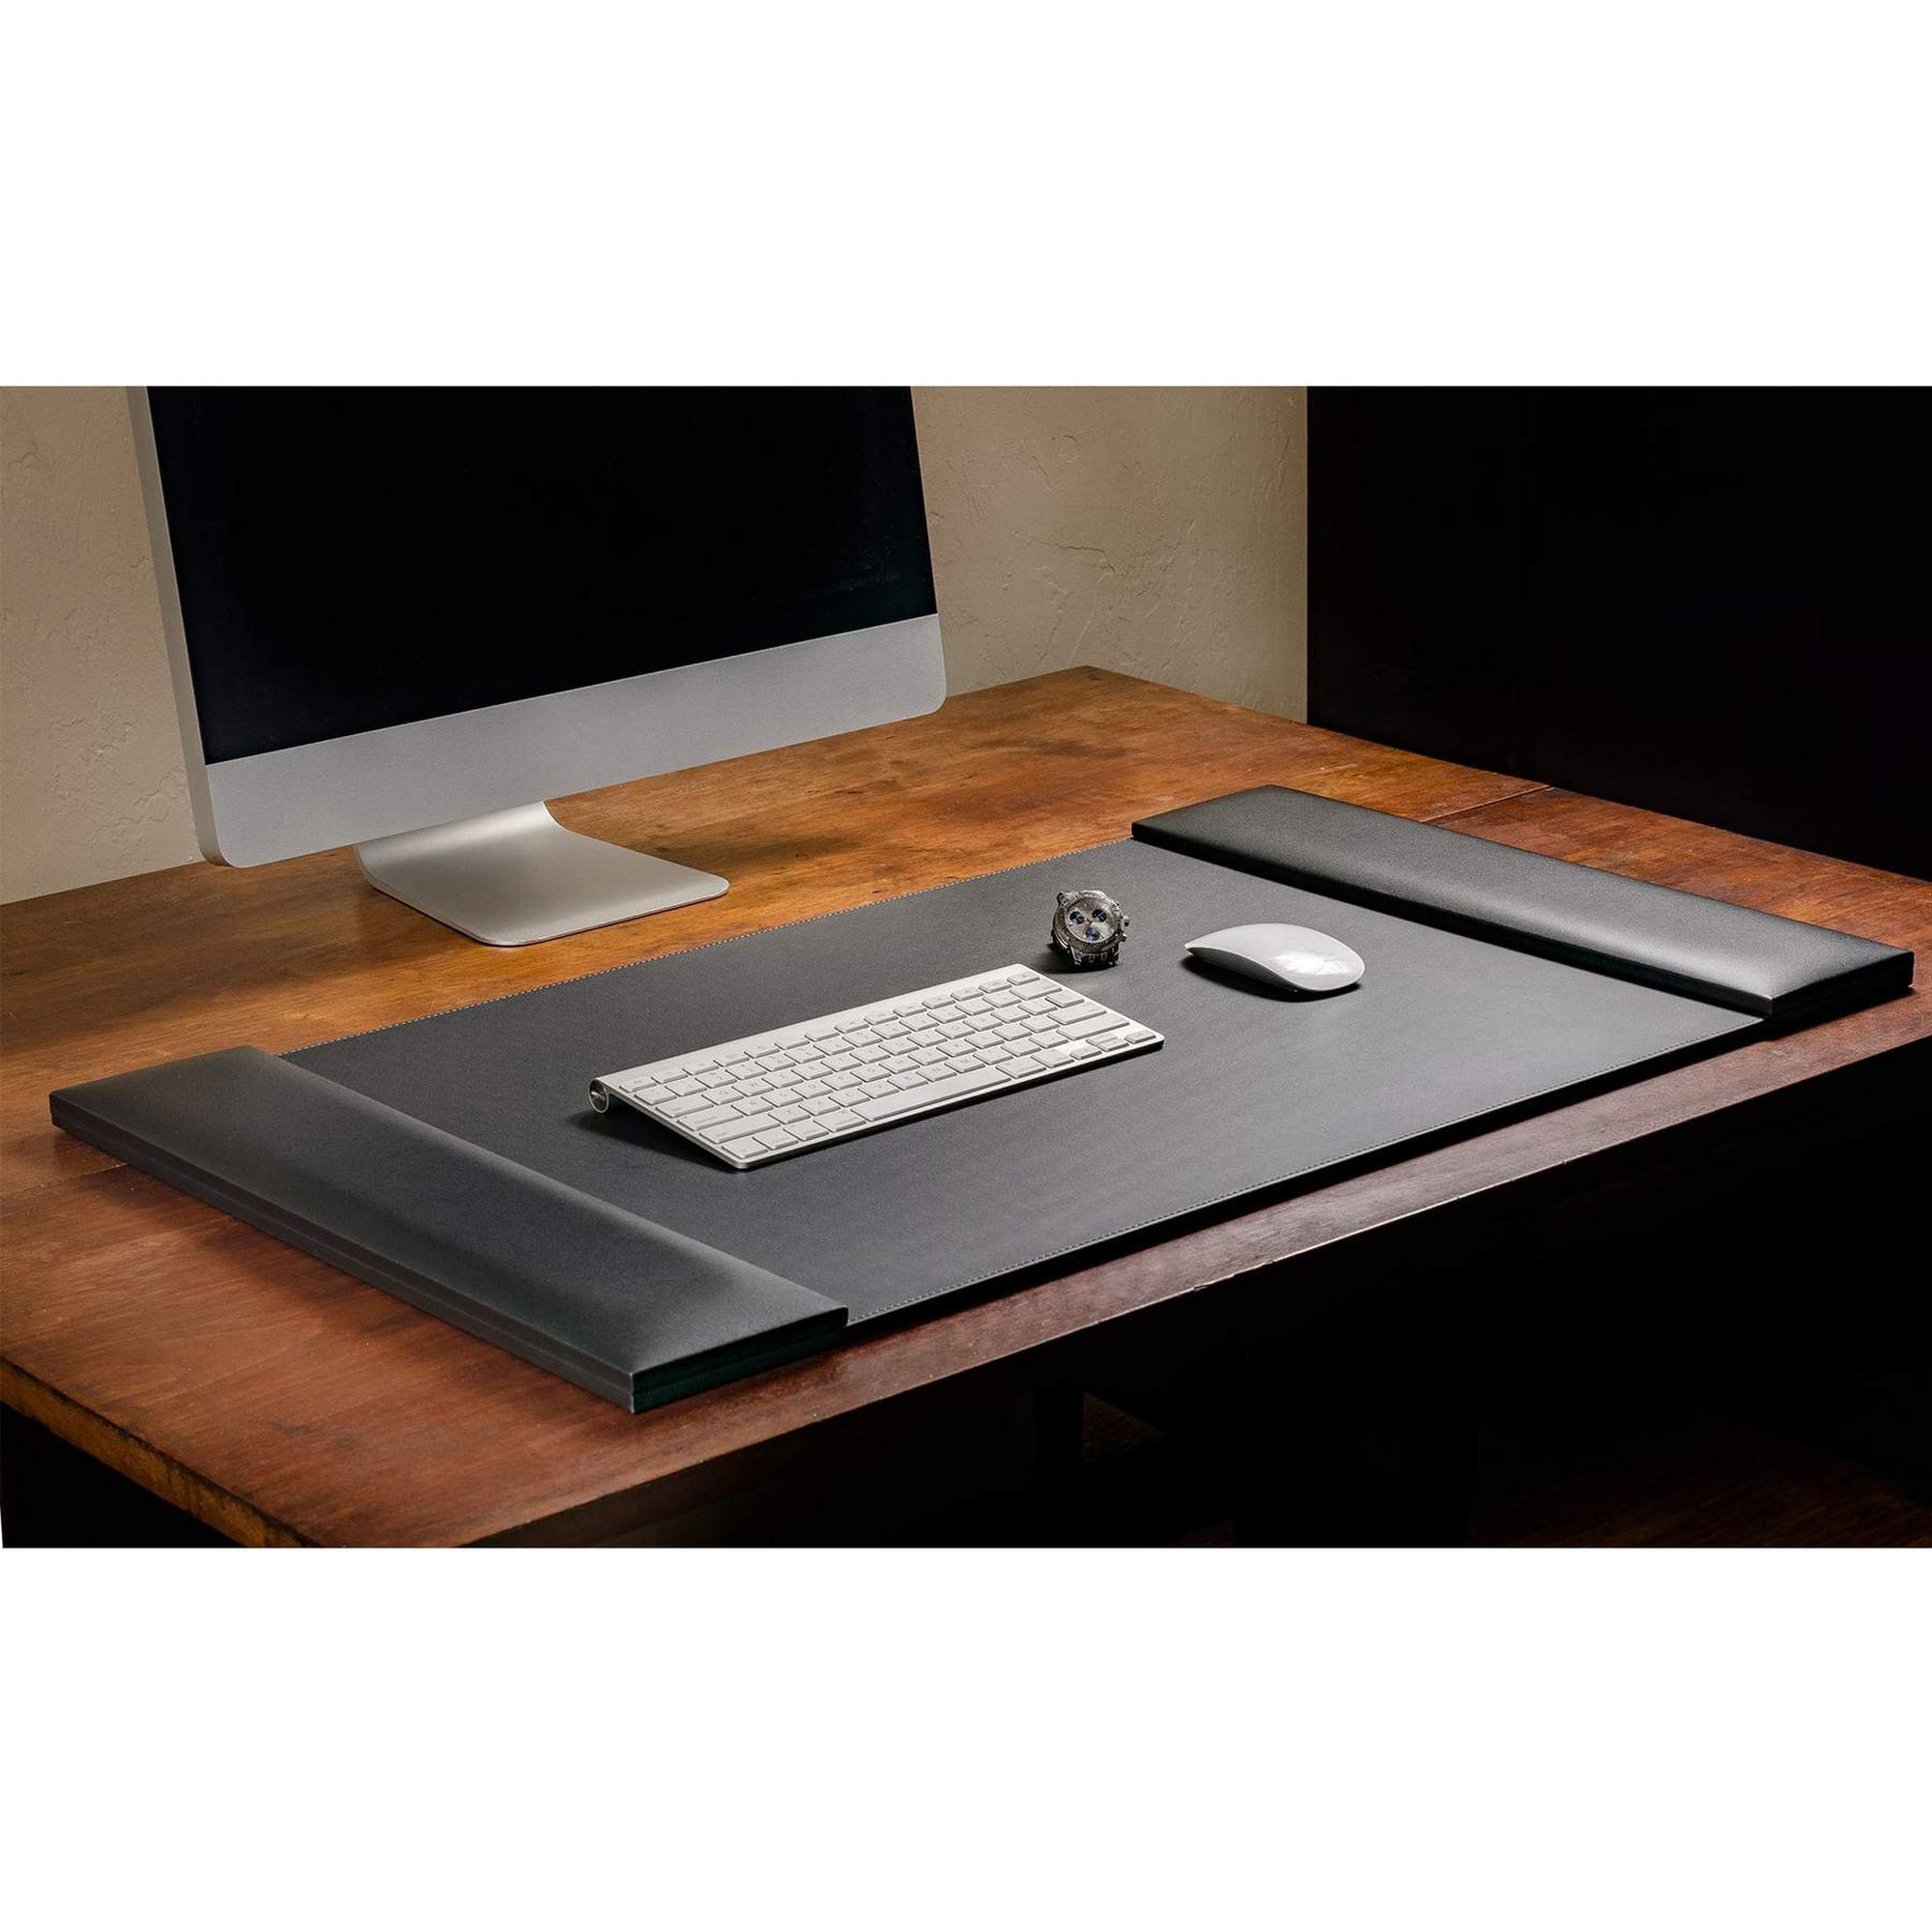 Dacasso Classic Leather Mat Desk pad, 24 x 19, Black